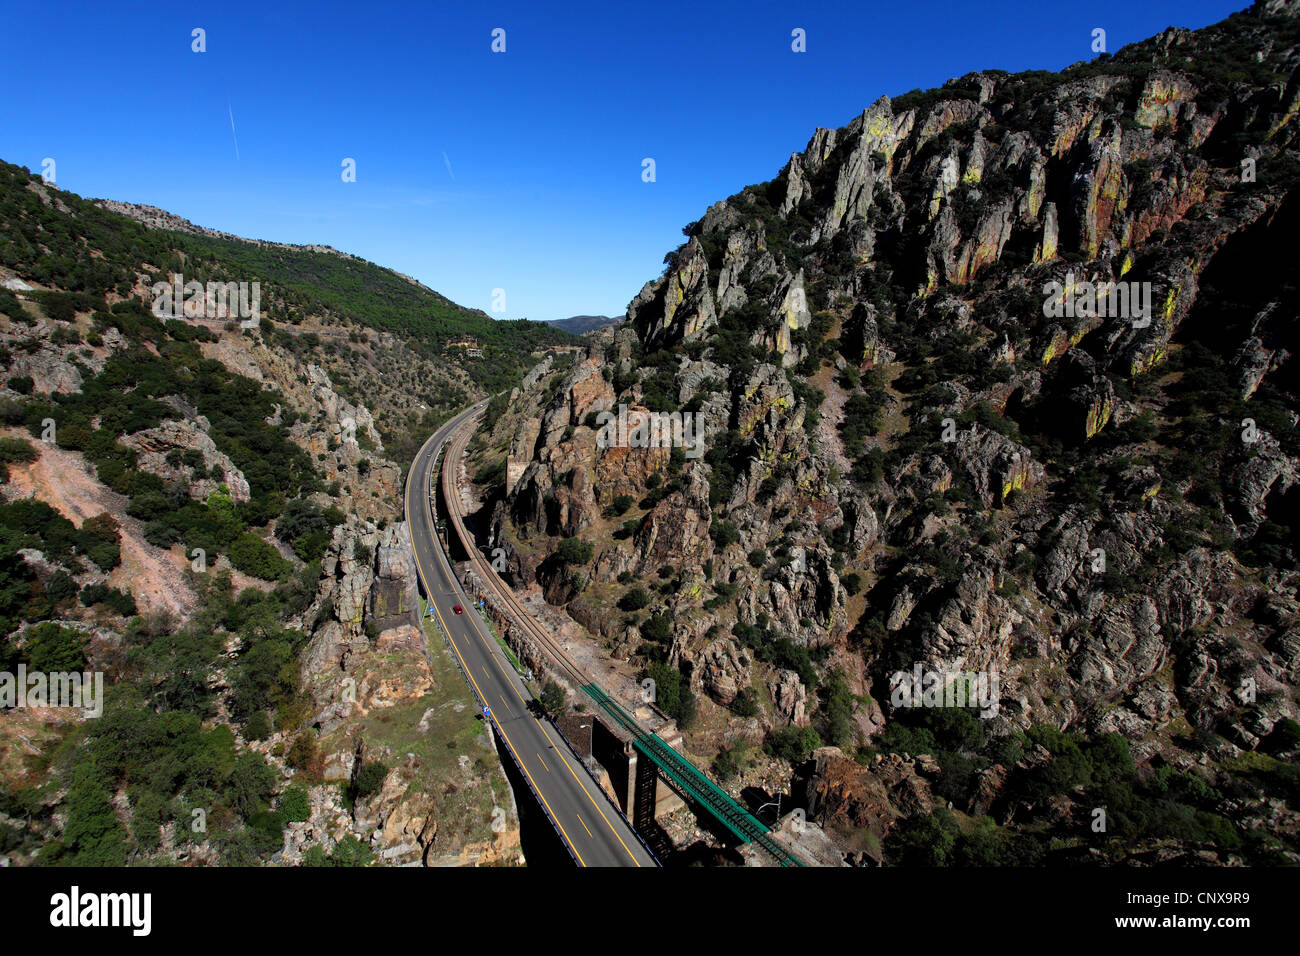 Paso de montaña Desfiladero de Despenaperros, España, Andalusien Foto de stock